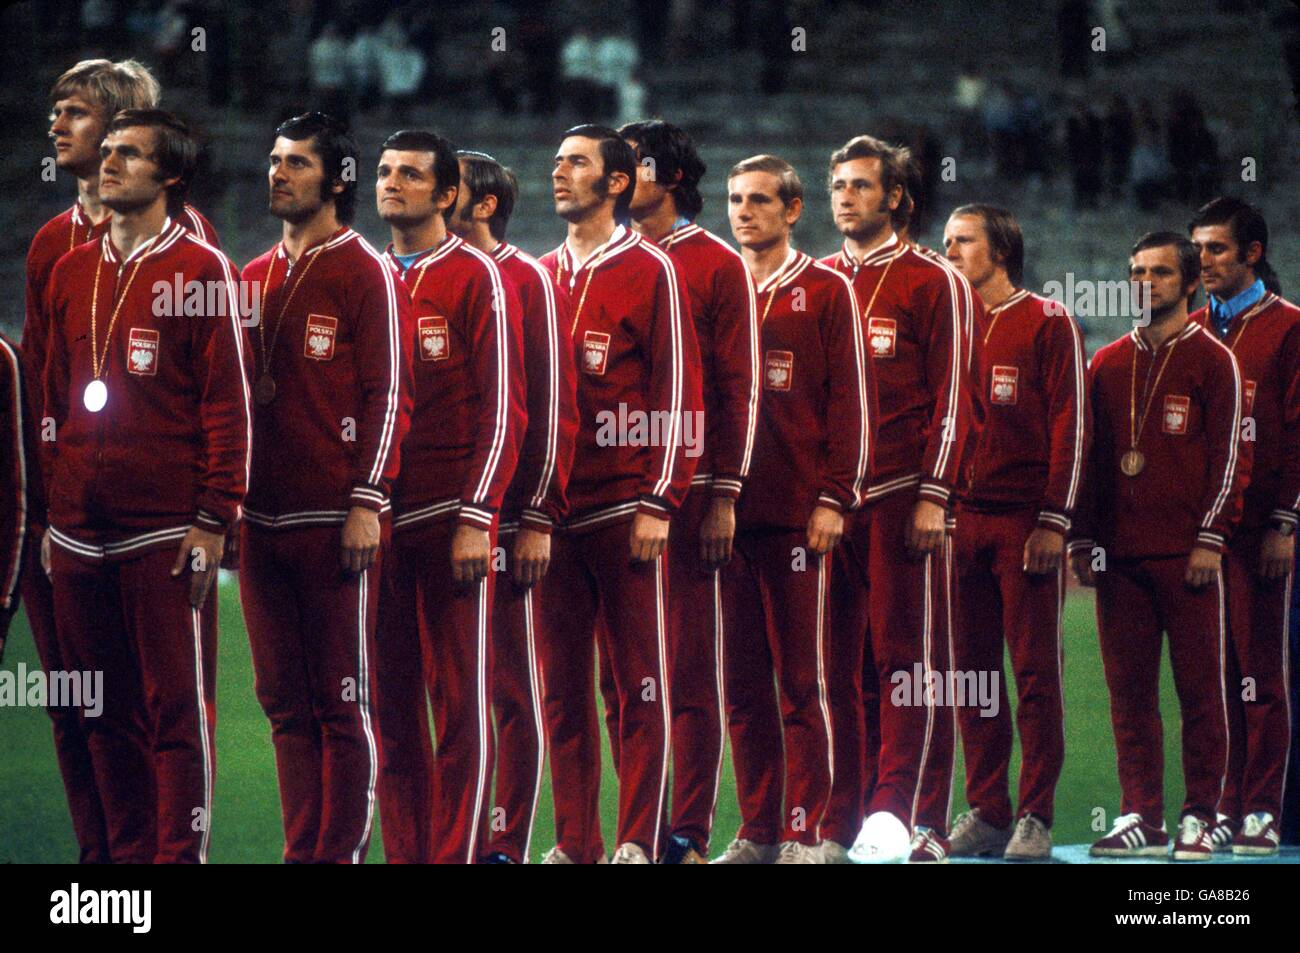  El hilo de los popuheads futboleros II - Página 23 Soccer-munich-olympics-1972-soccer-final-poland-v-hungary-GA8B26